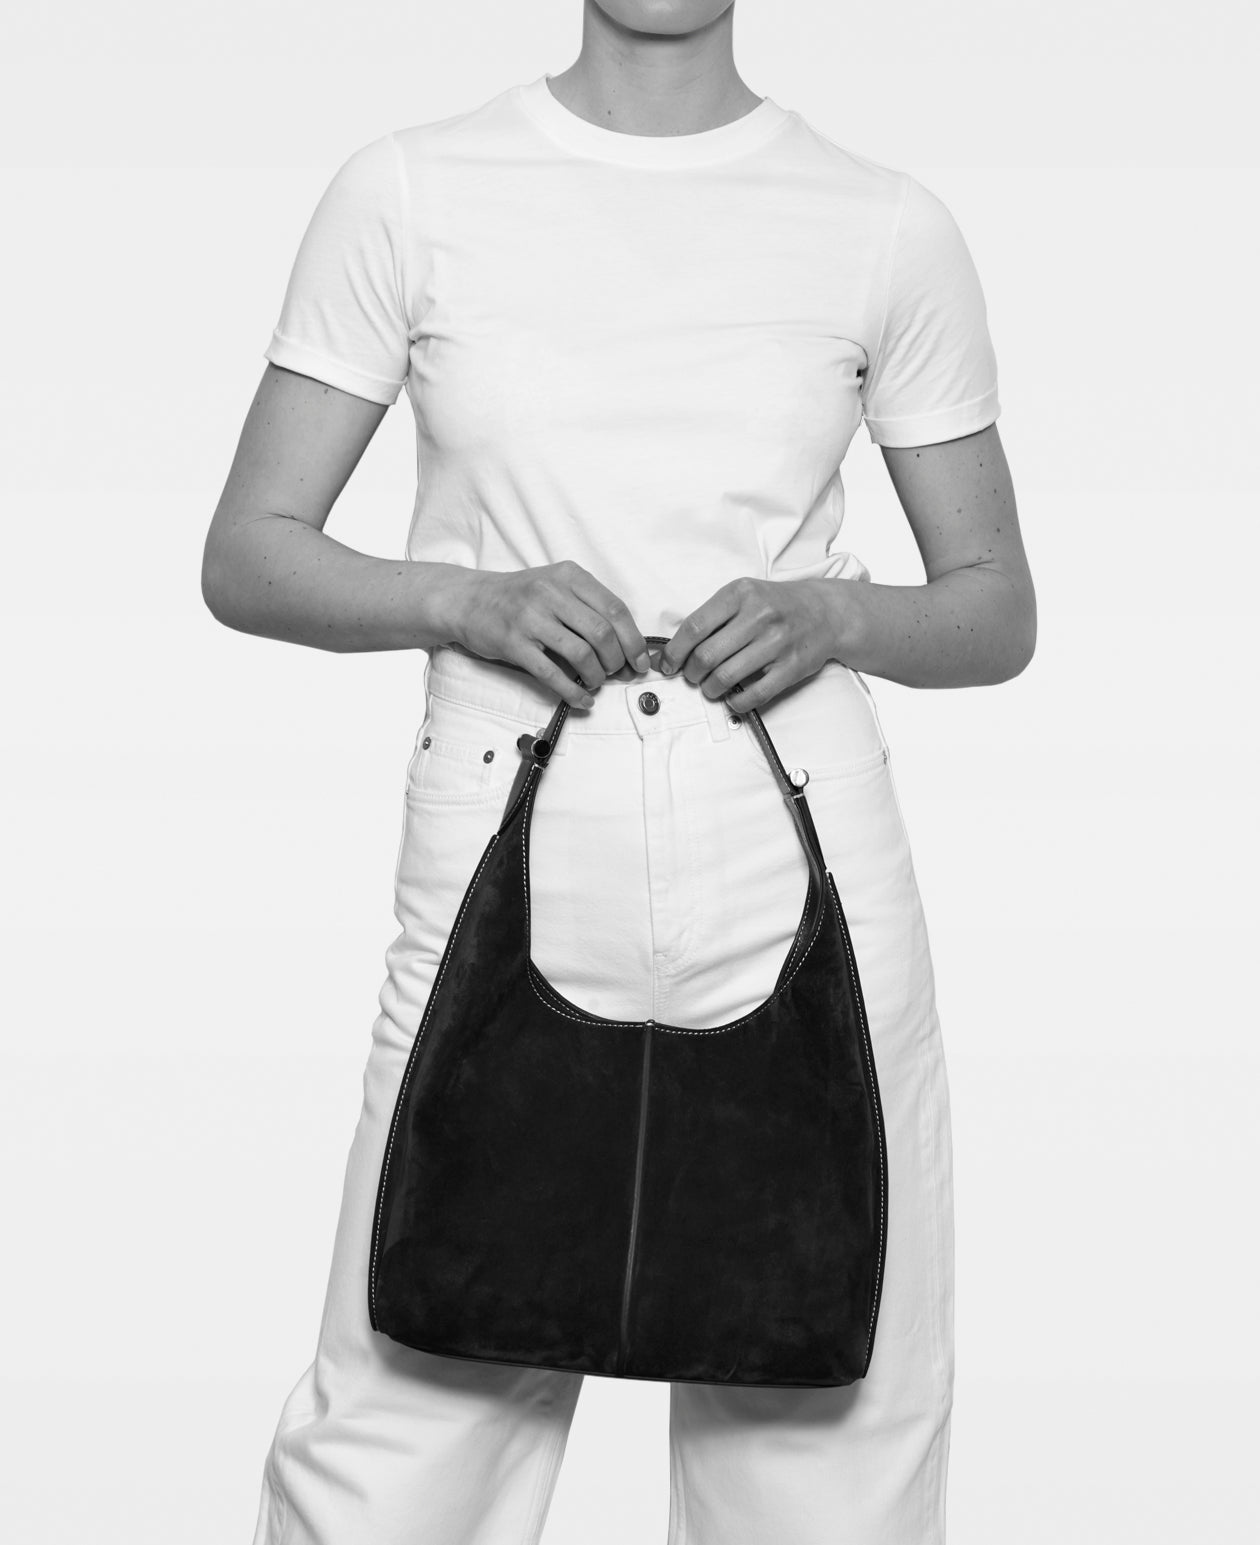 Crossbody Bags For Women | COACH®